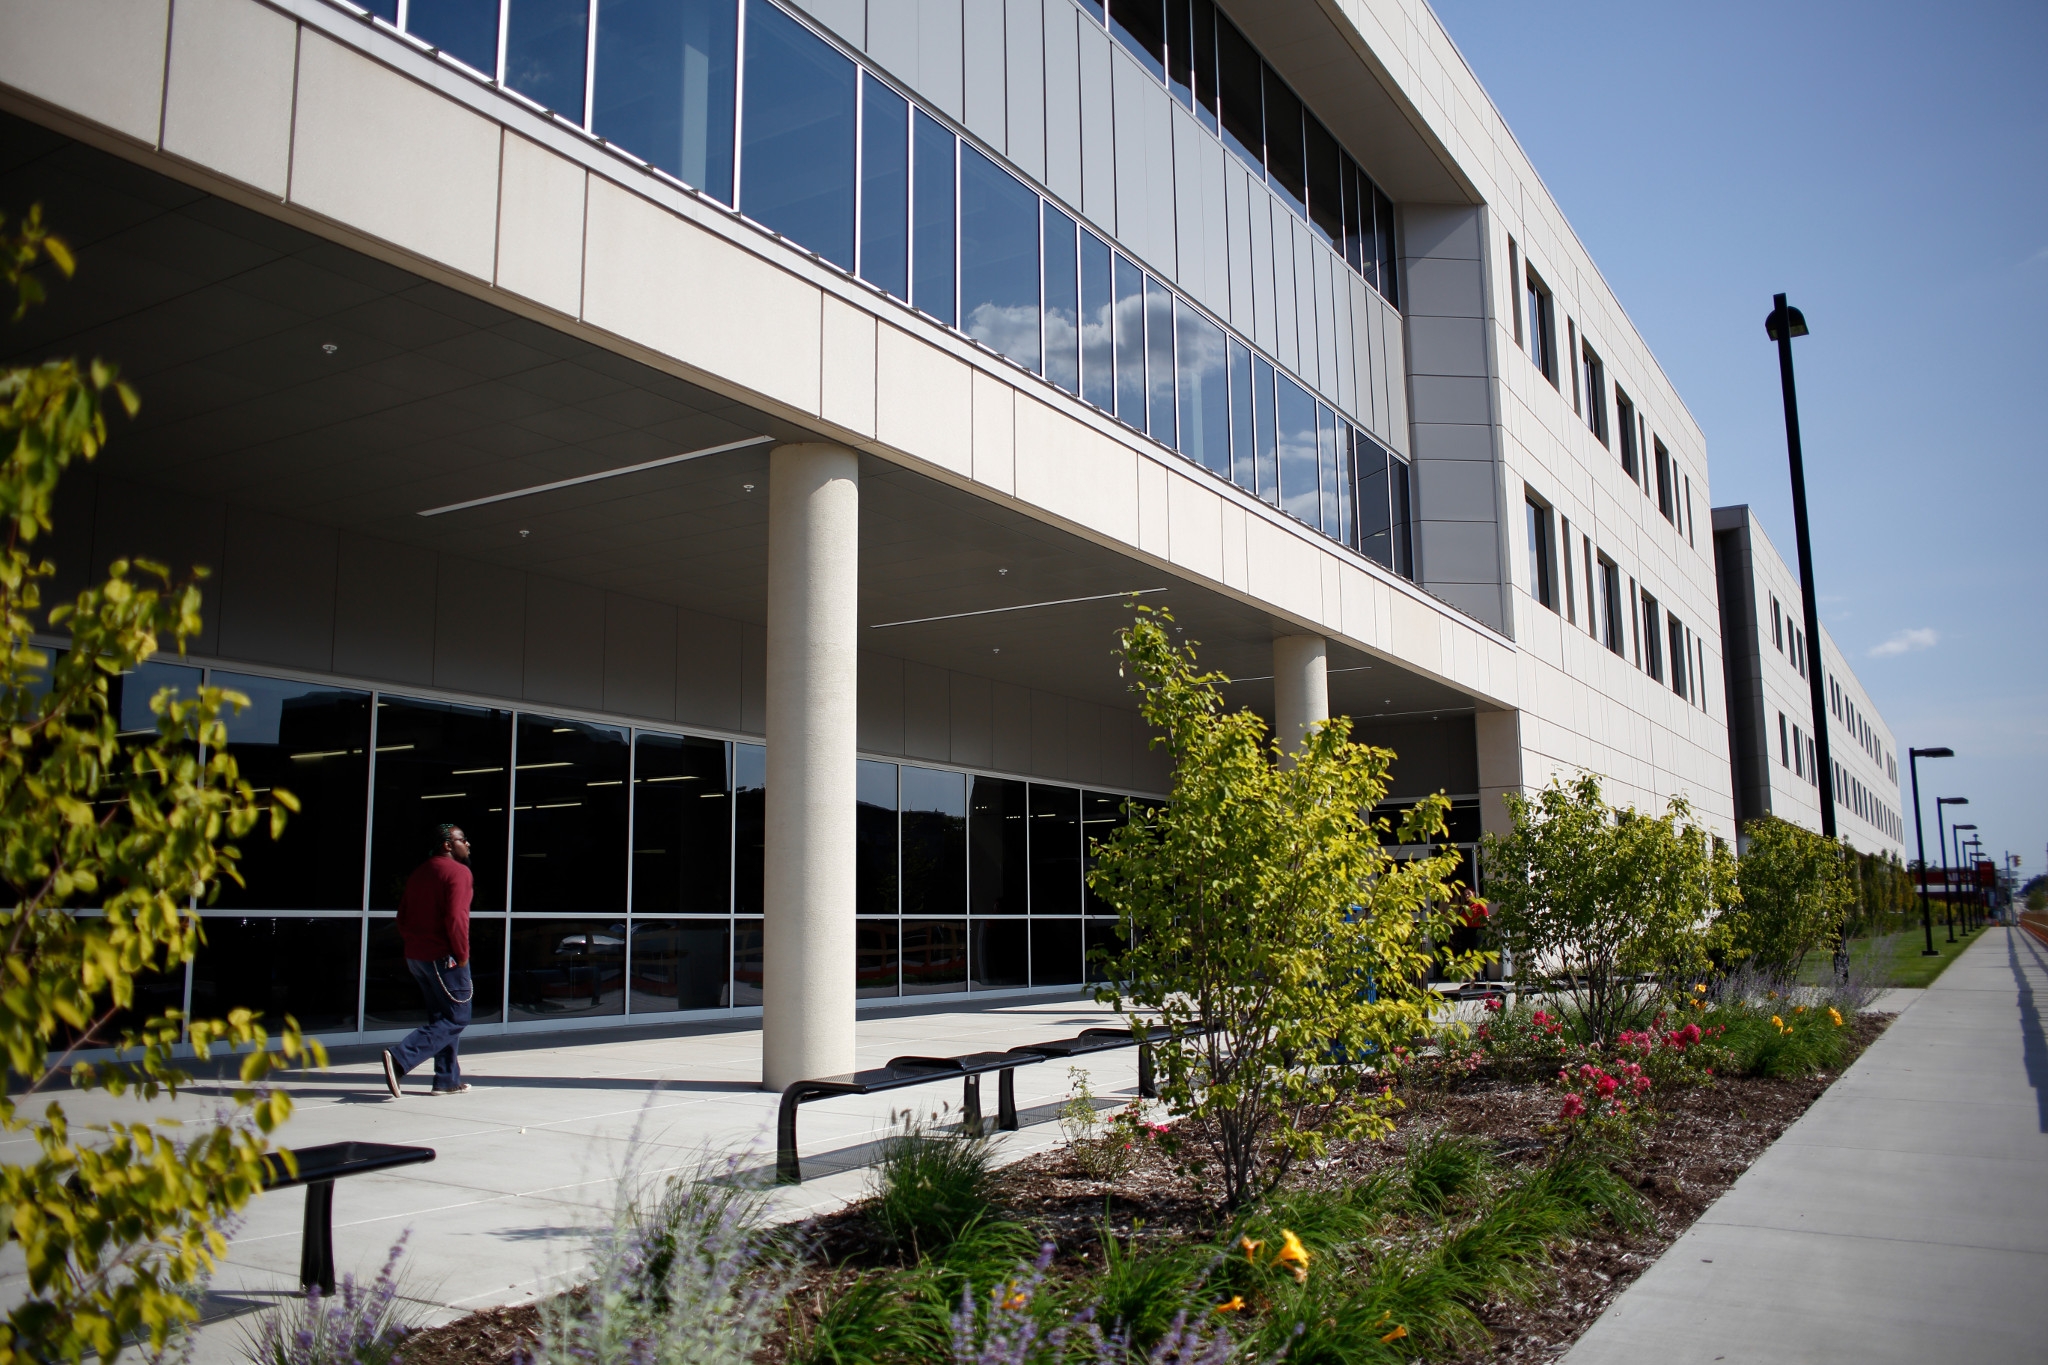 The exterior of IU Northwest's Arts and Sciences Building